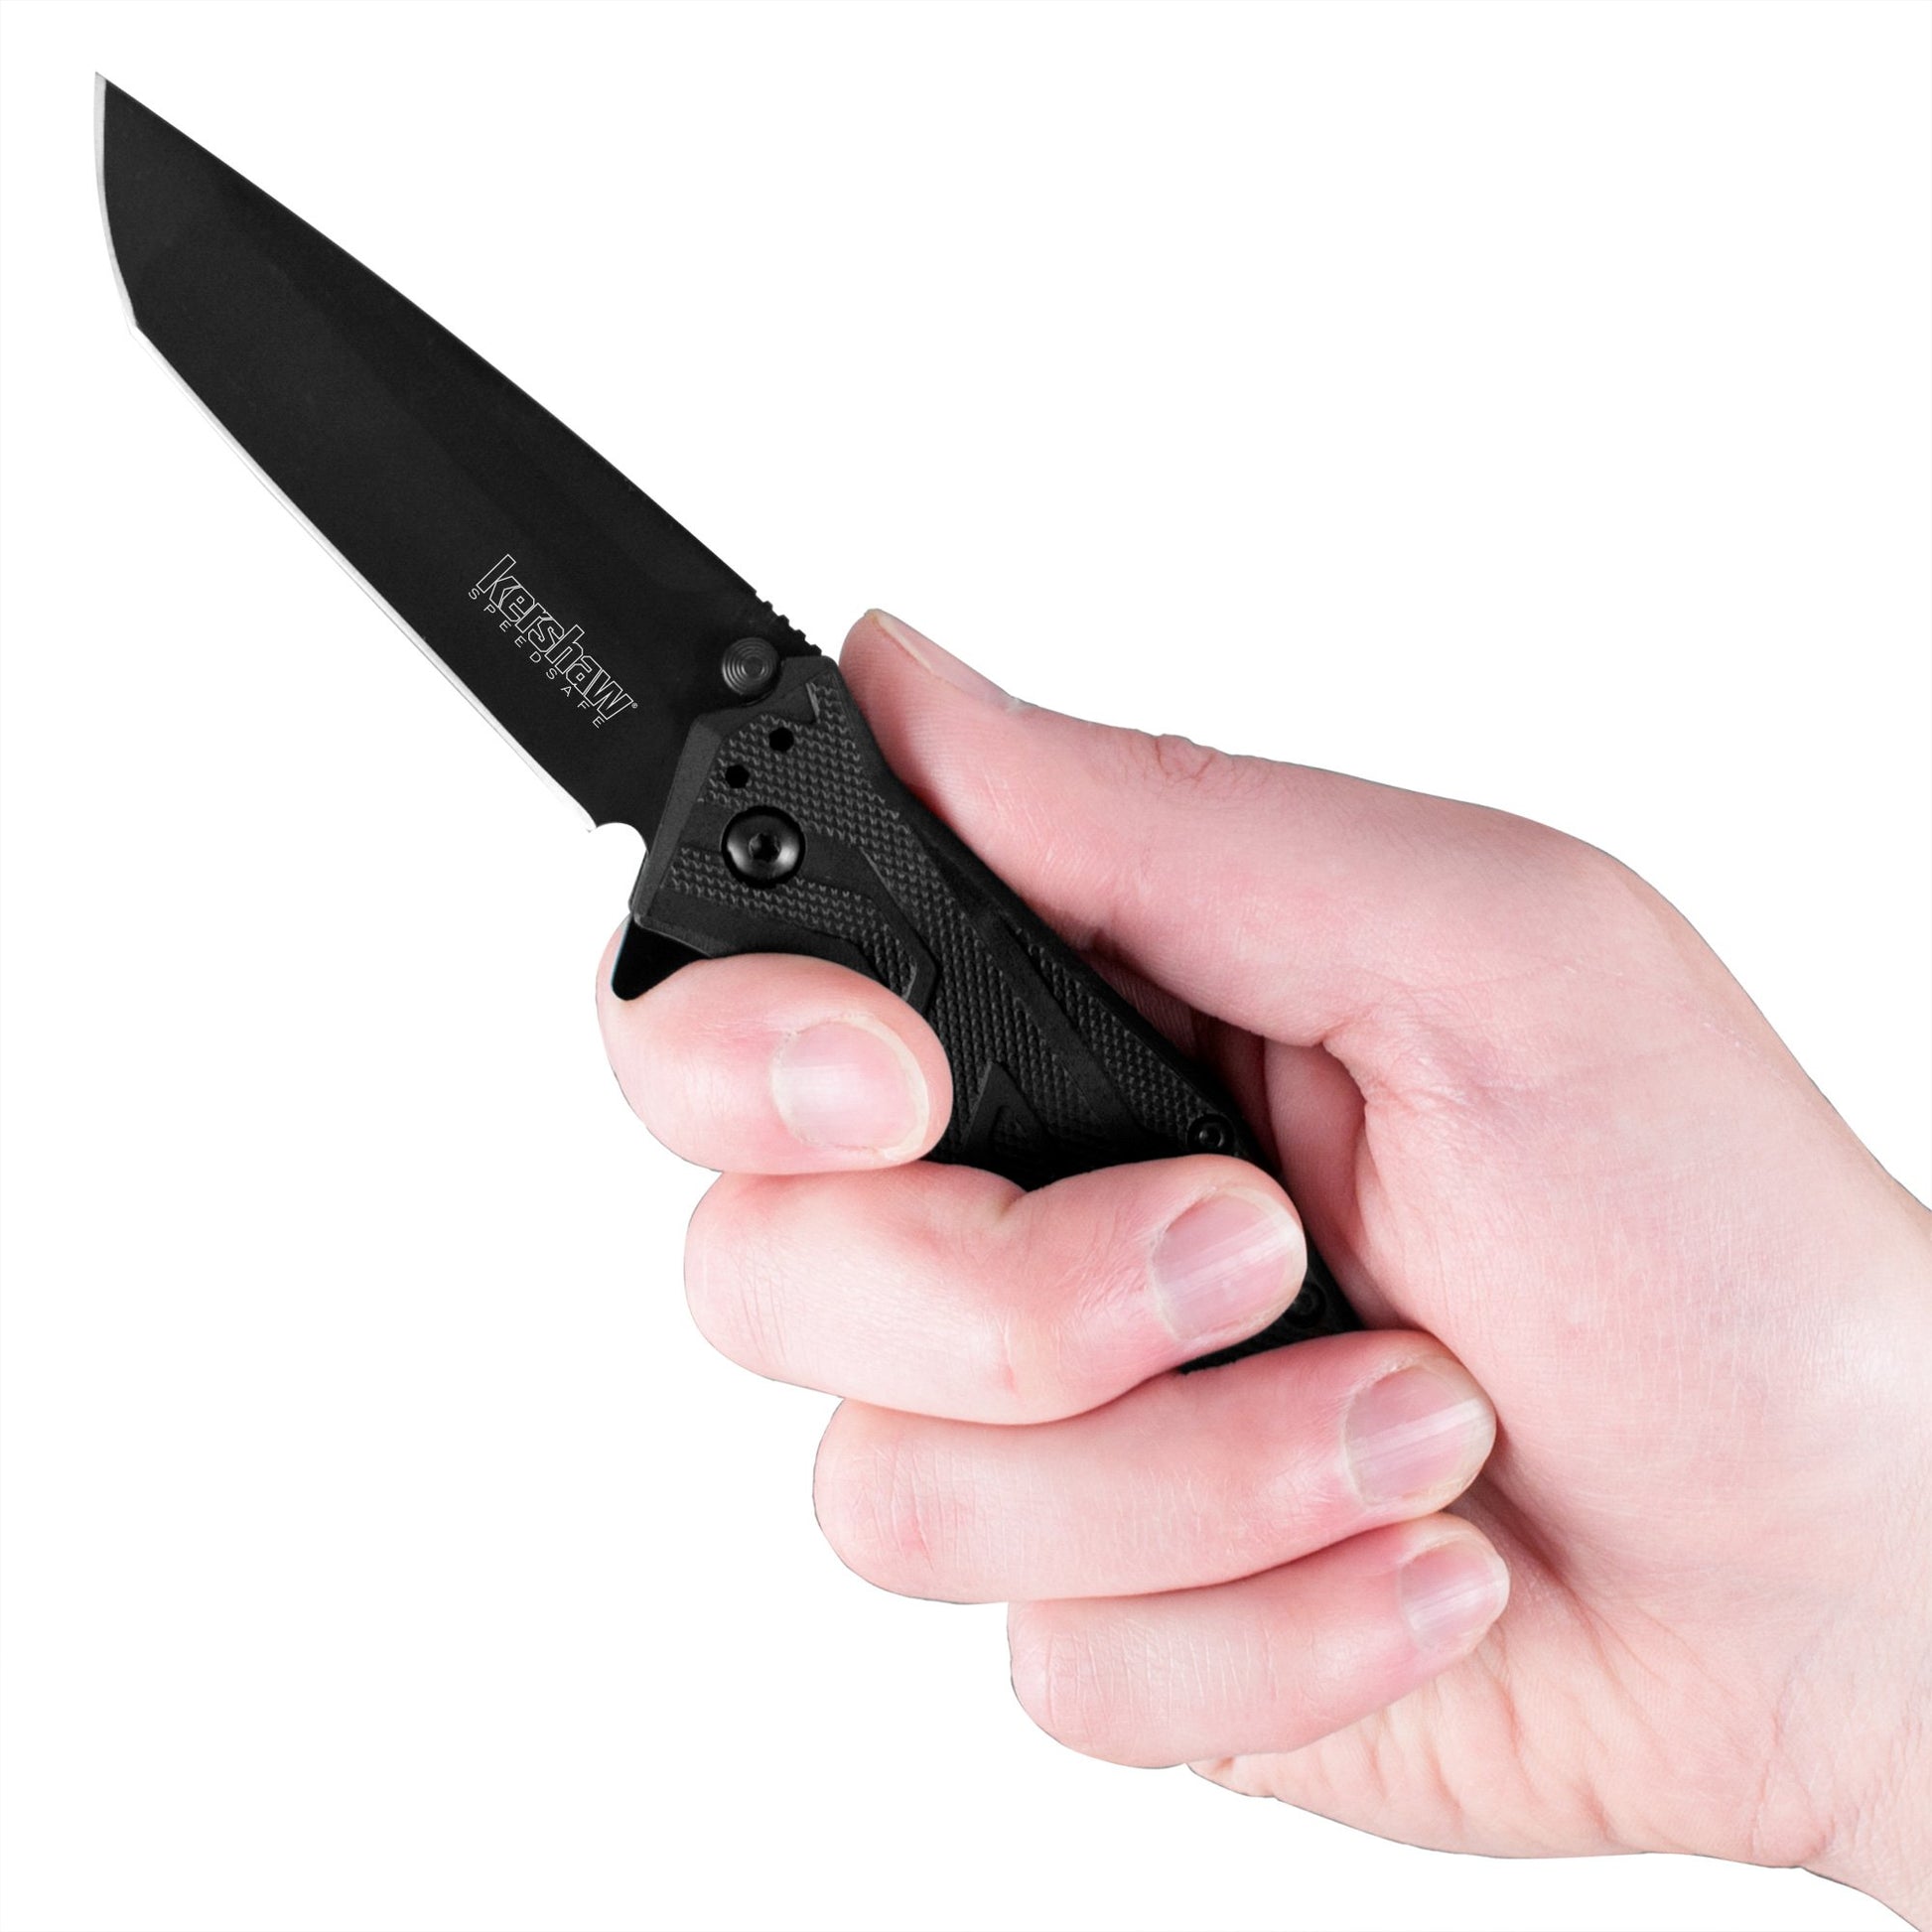  Kershaw Clash Pocket Knife, Black Serrated (1605CKTST